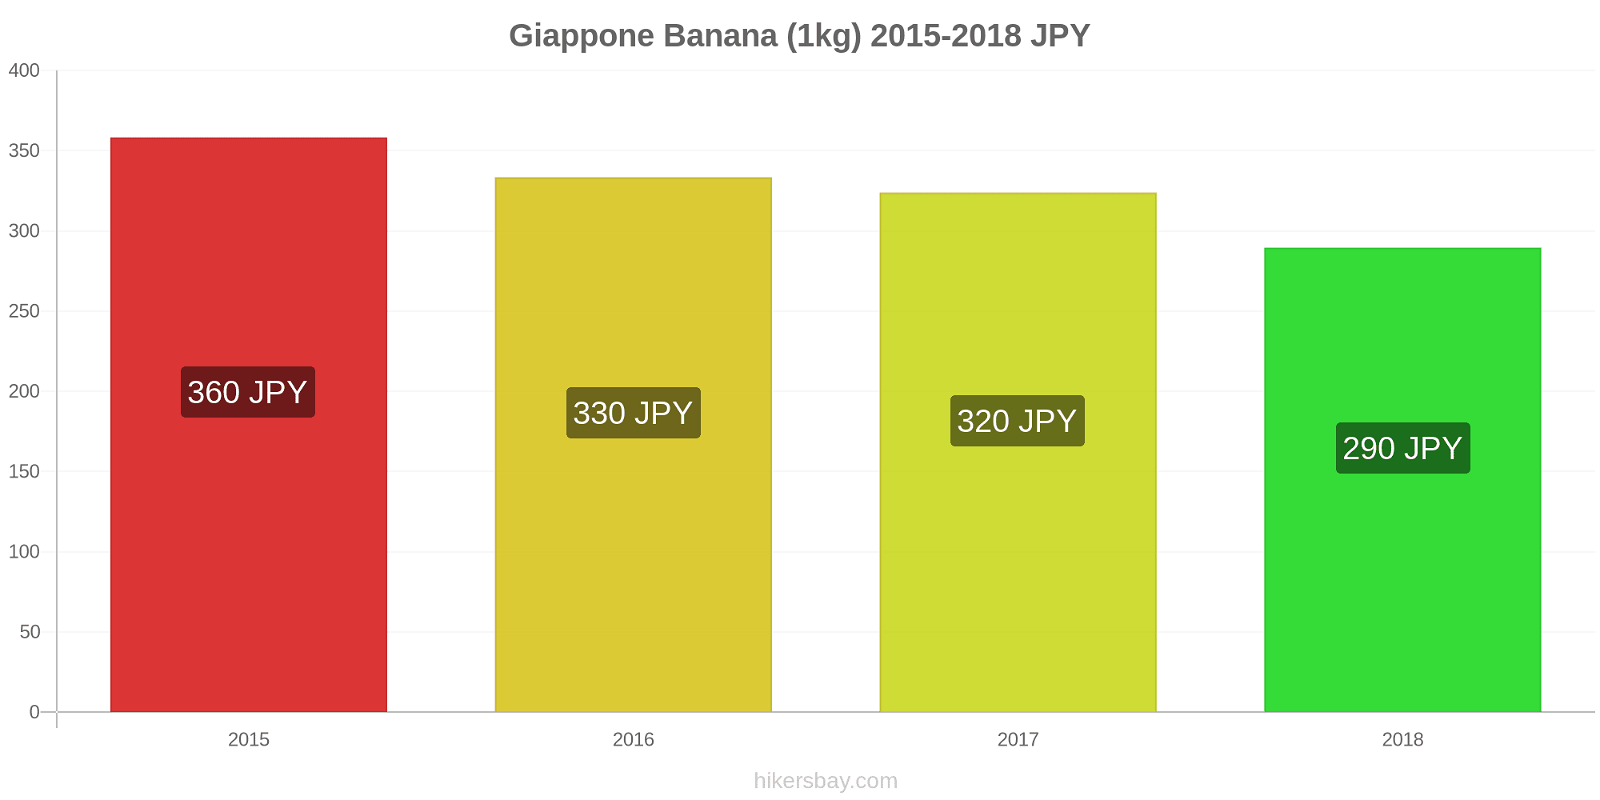 Giappone cambi di prezzo Banane (1kg) hikersbay.com